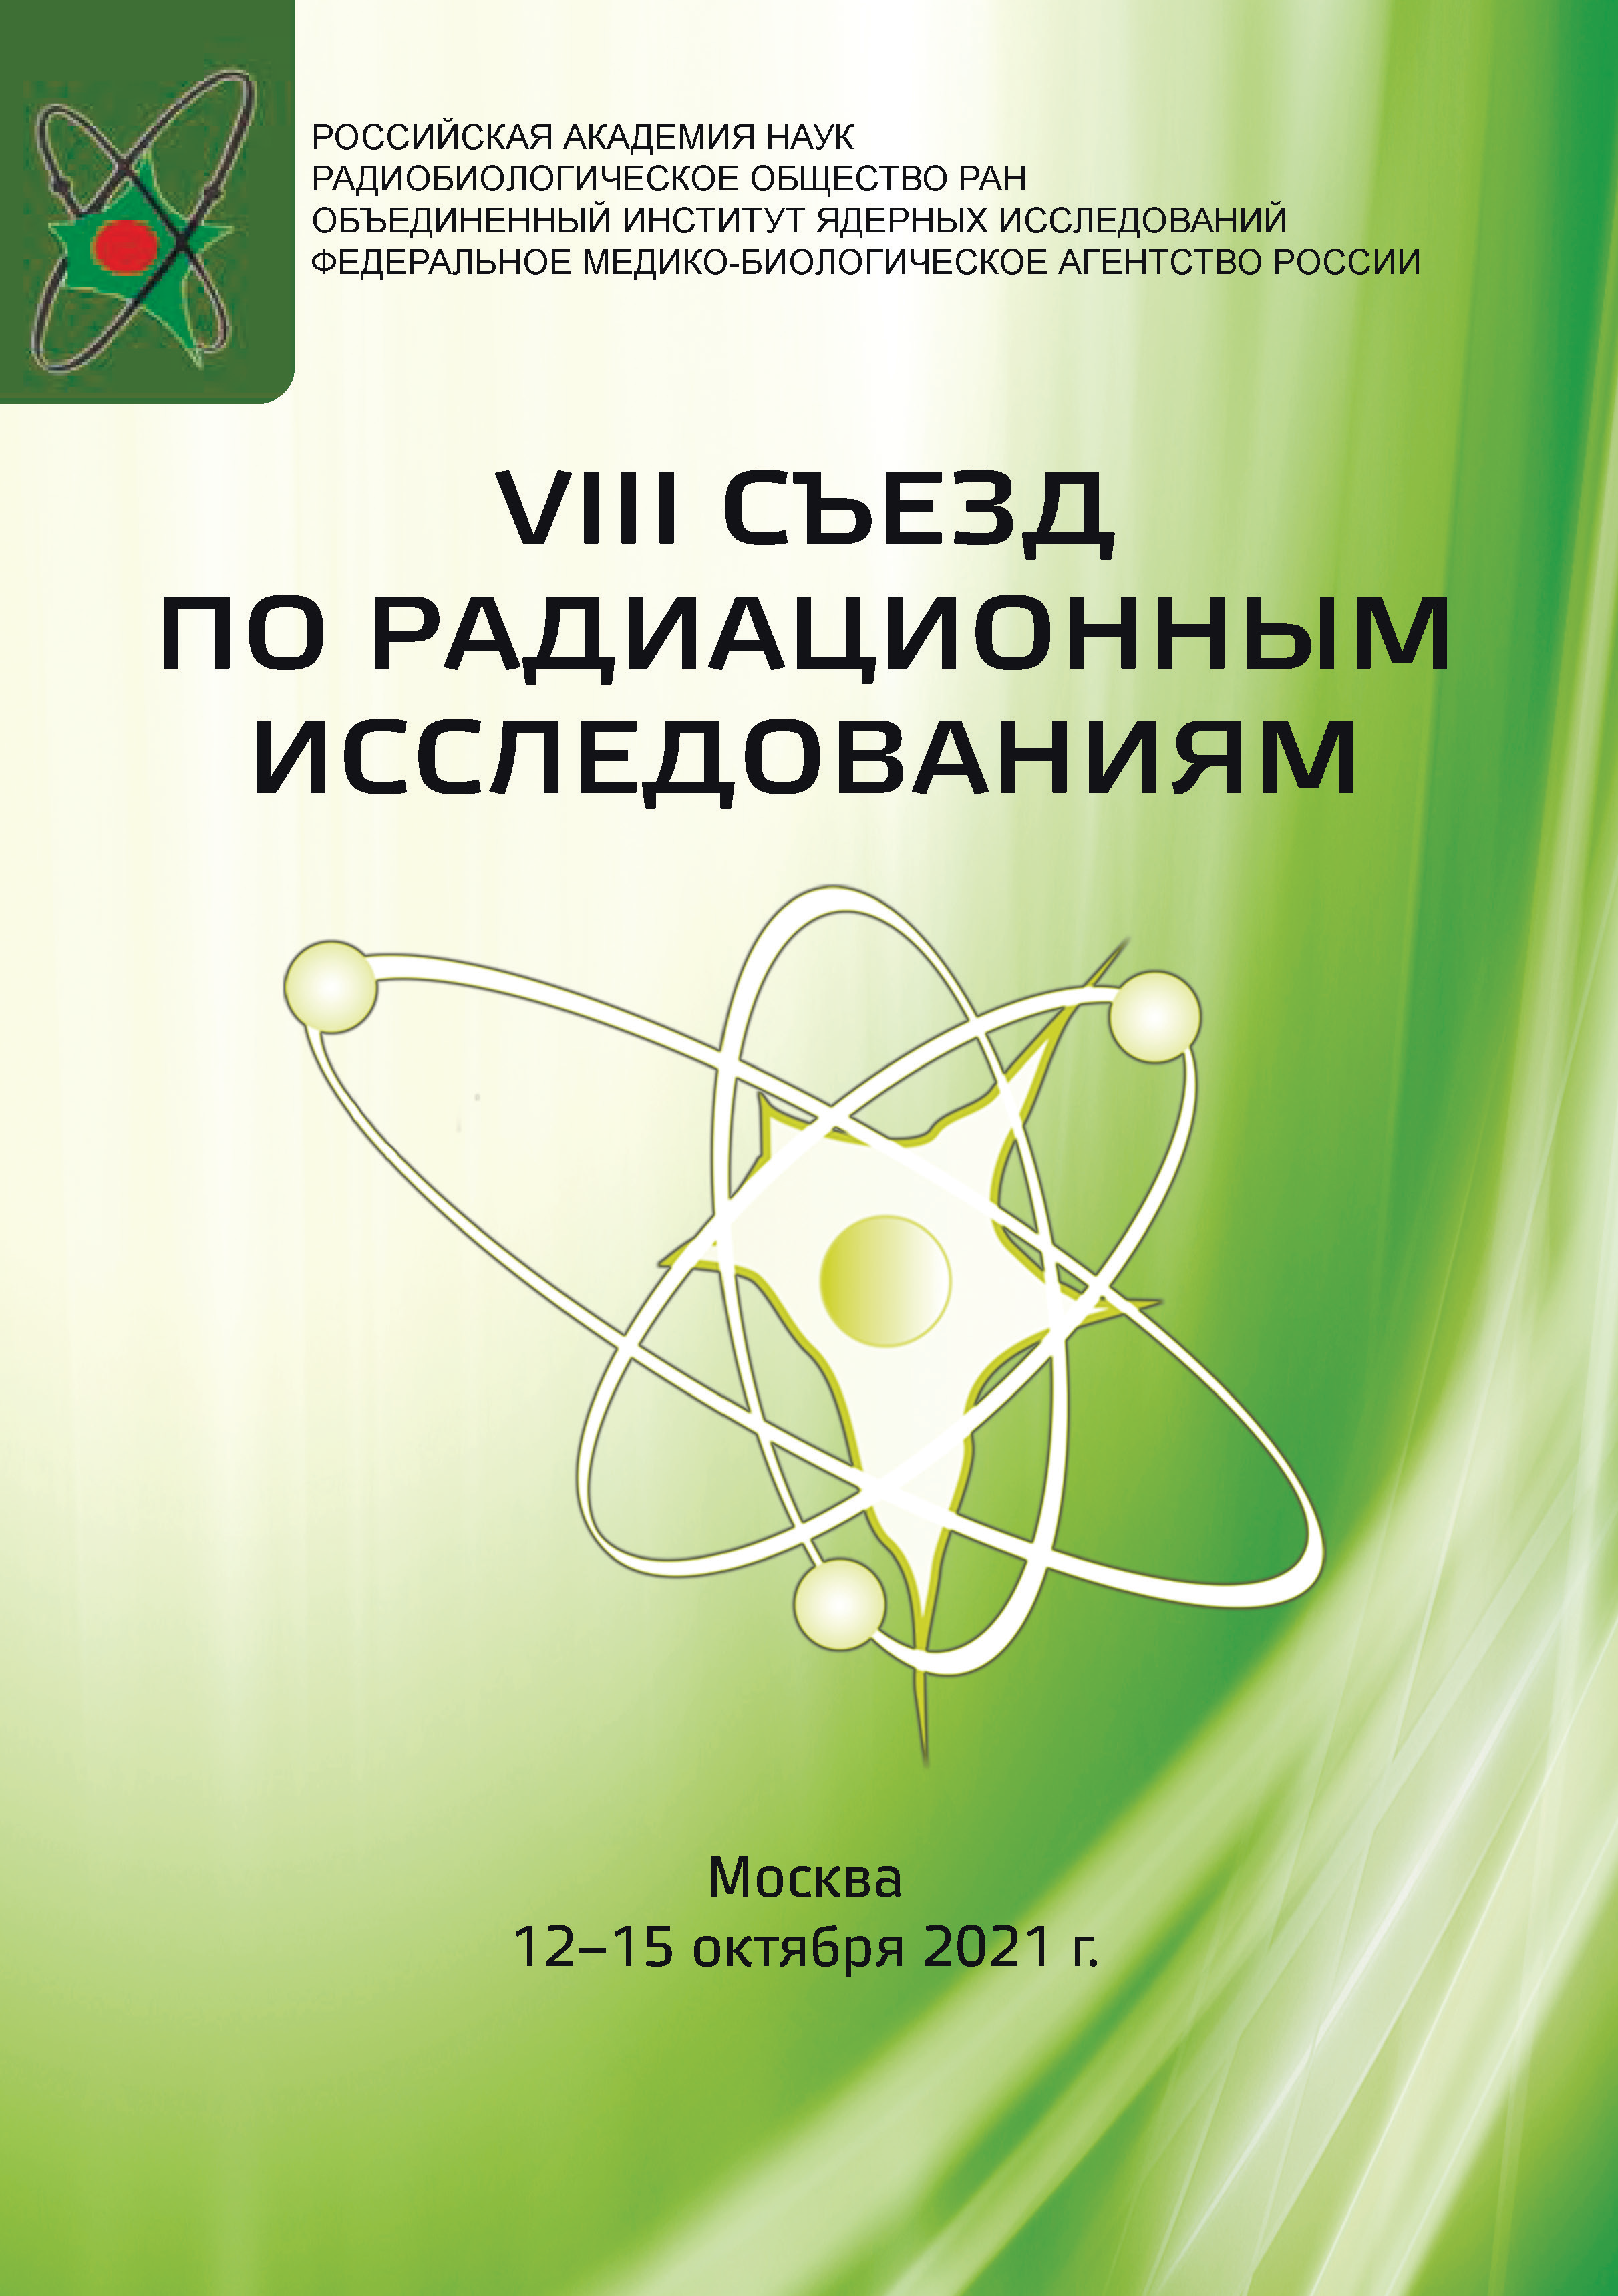 VIII Съезд по радиационным исследованиям